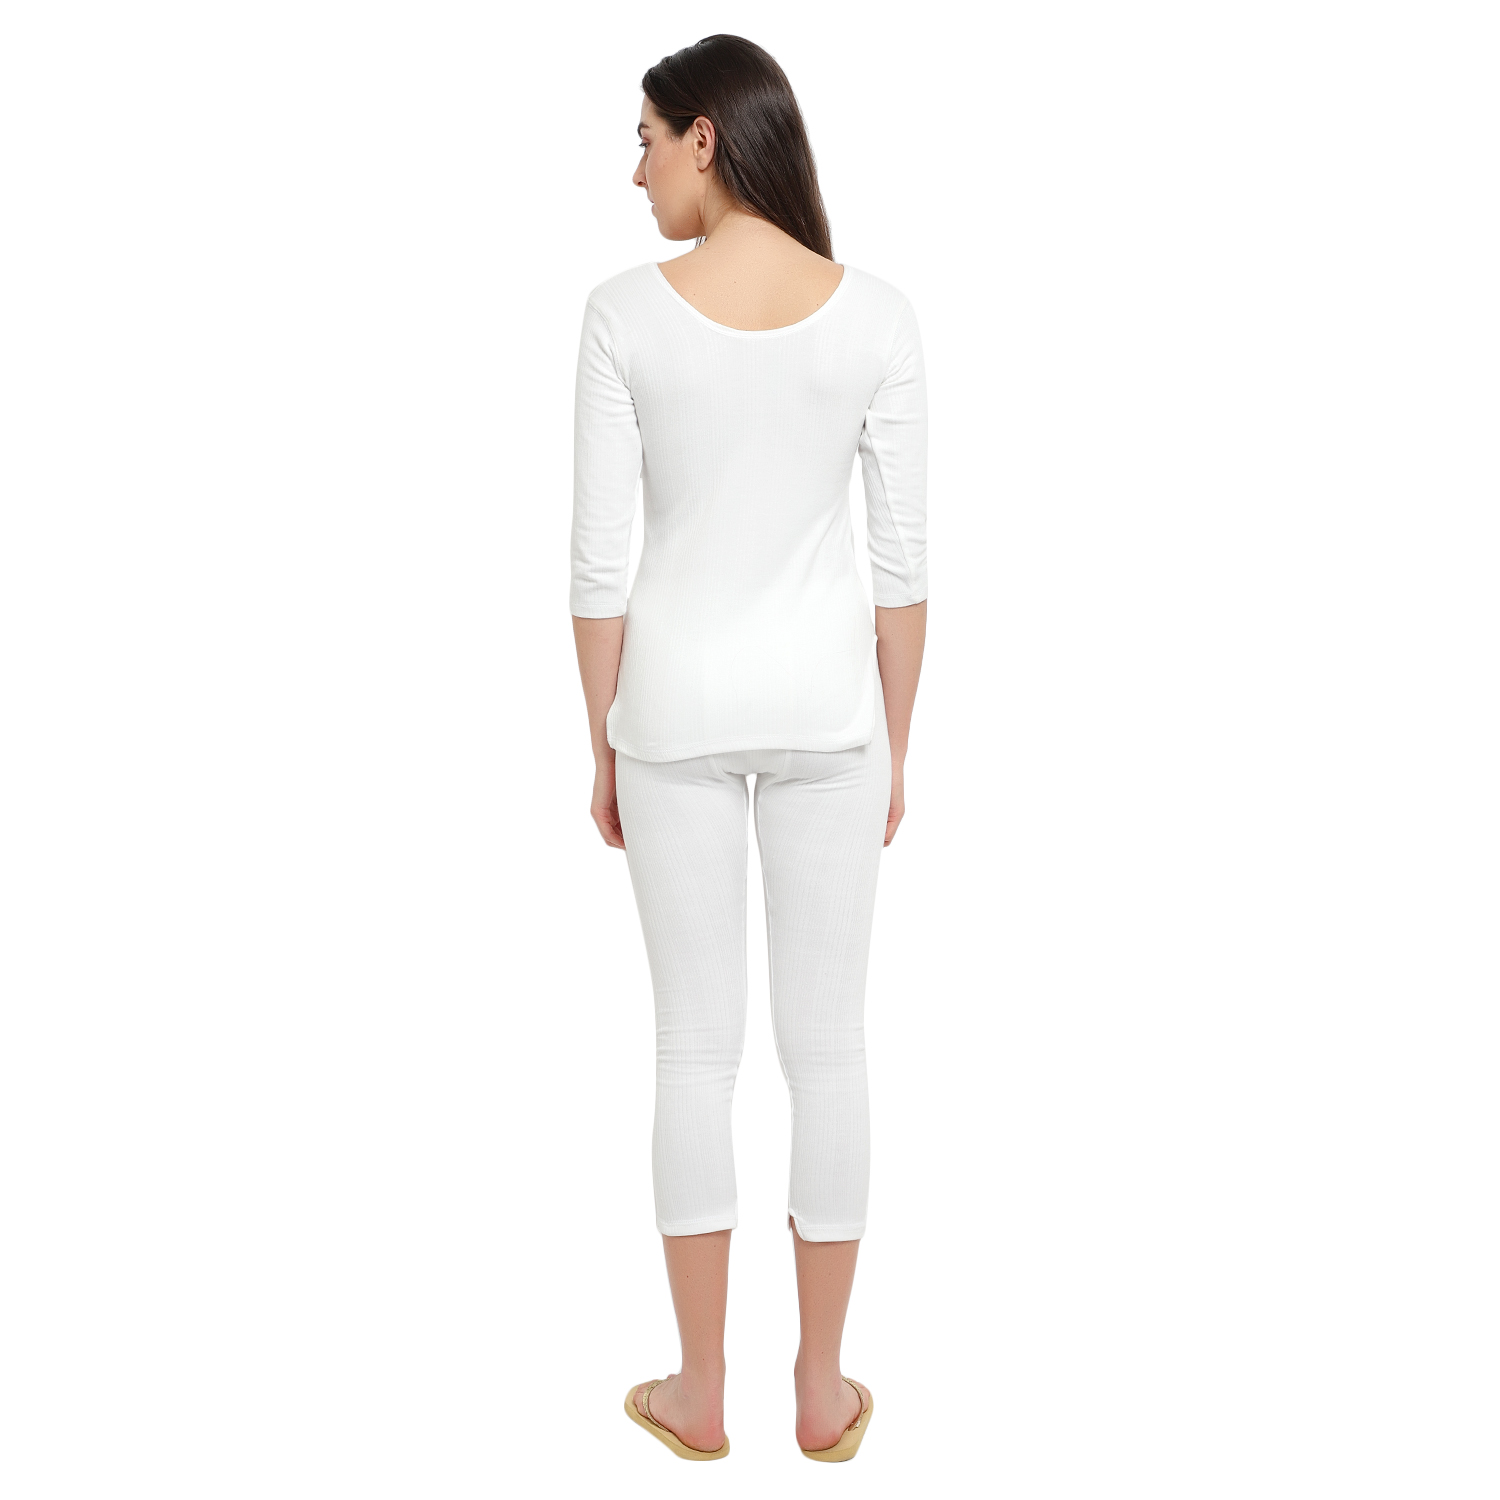 Buy Adeera Thermal wear for Women 3/4 Sleeves Body Warmer White Online ...